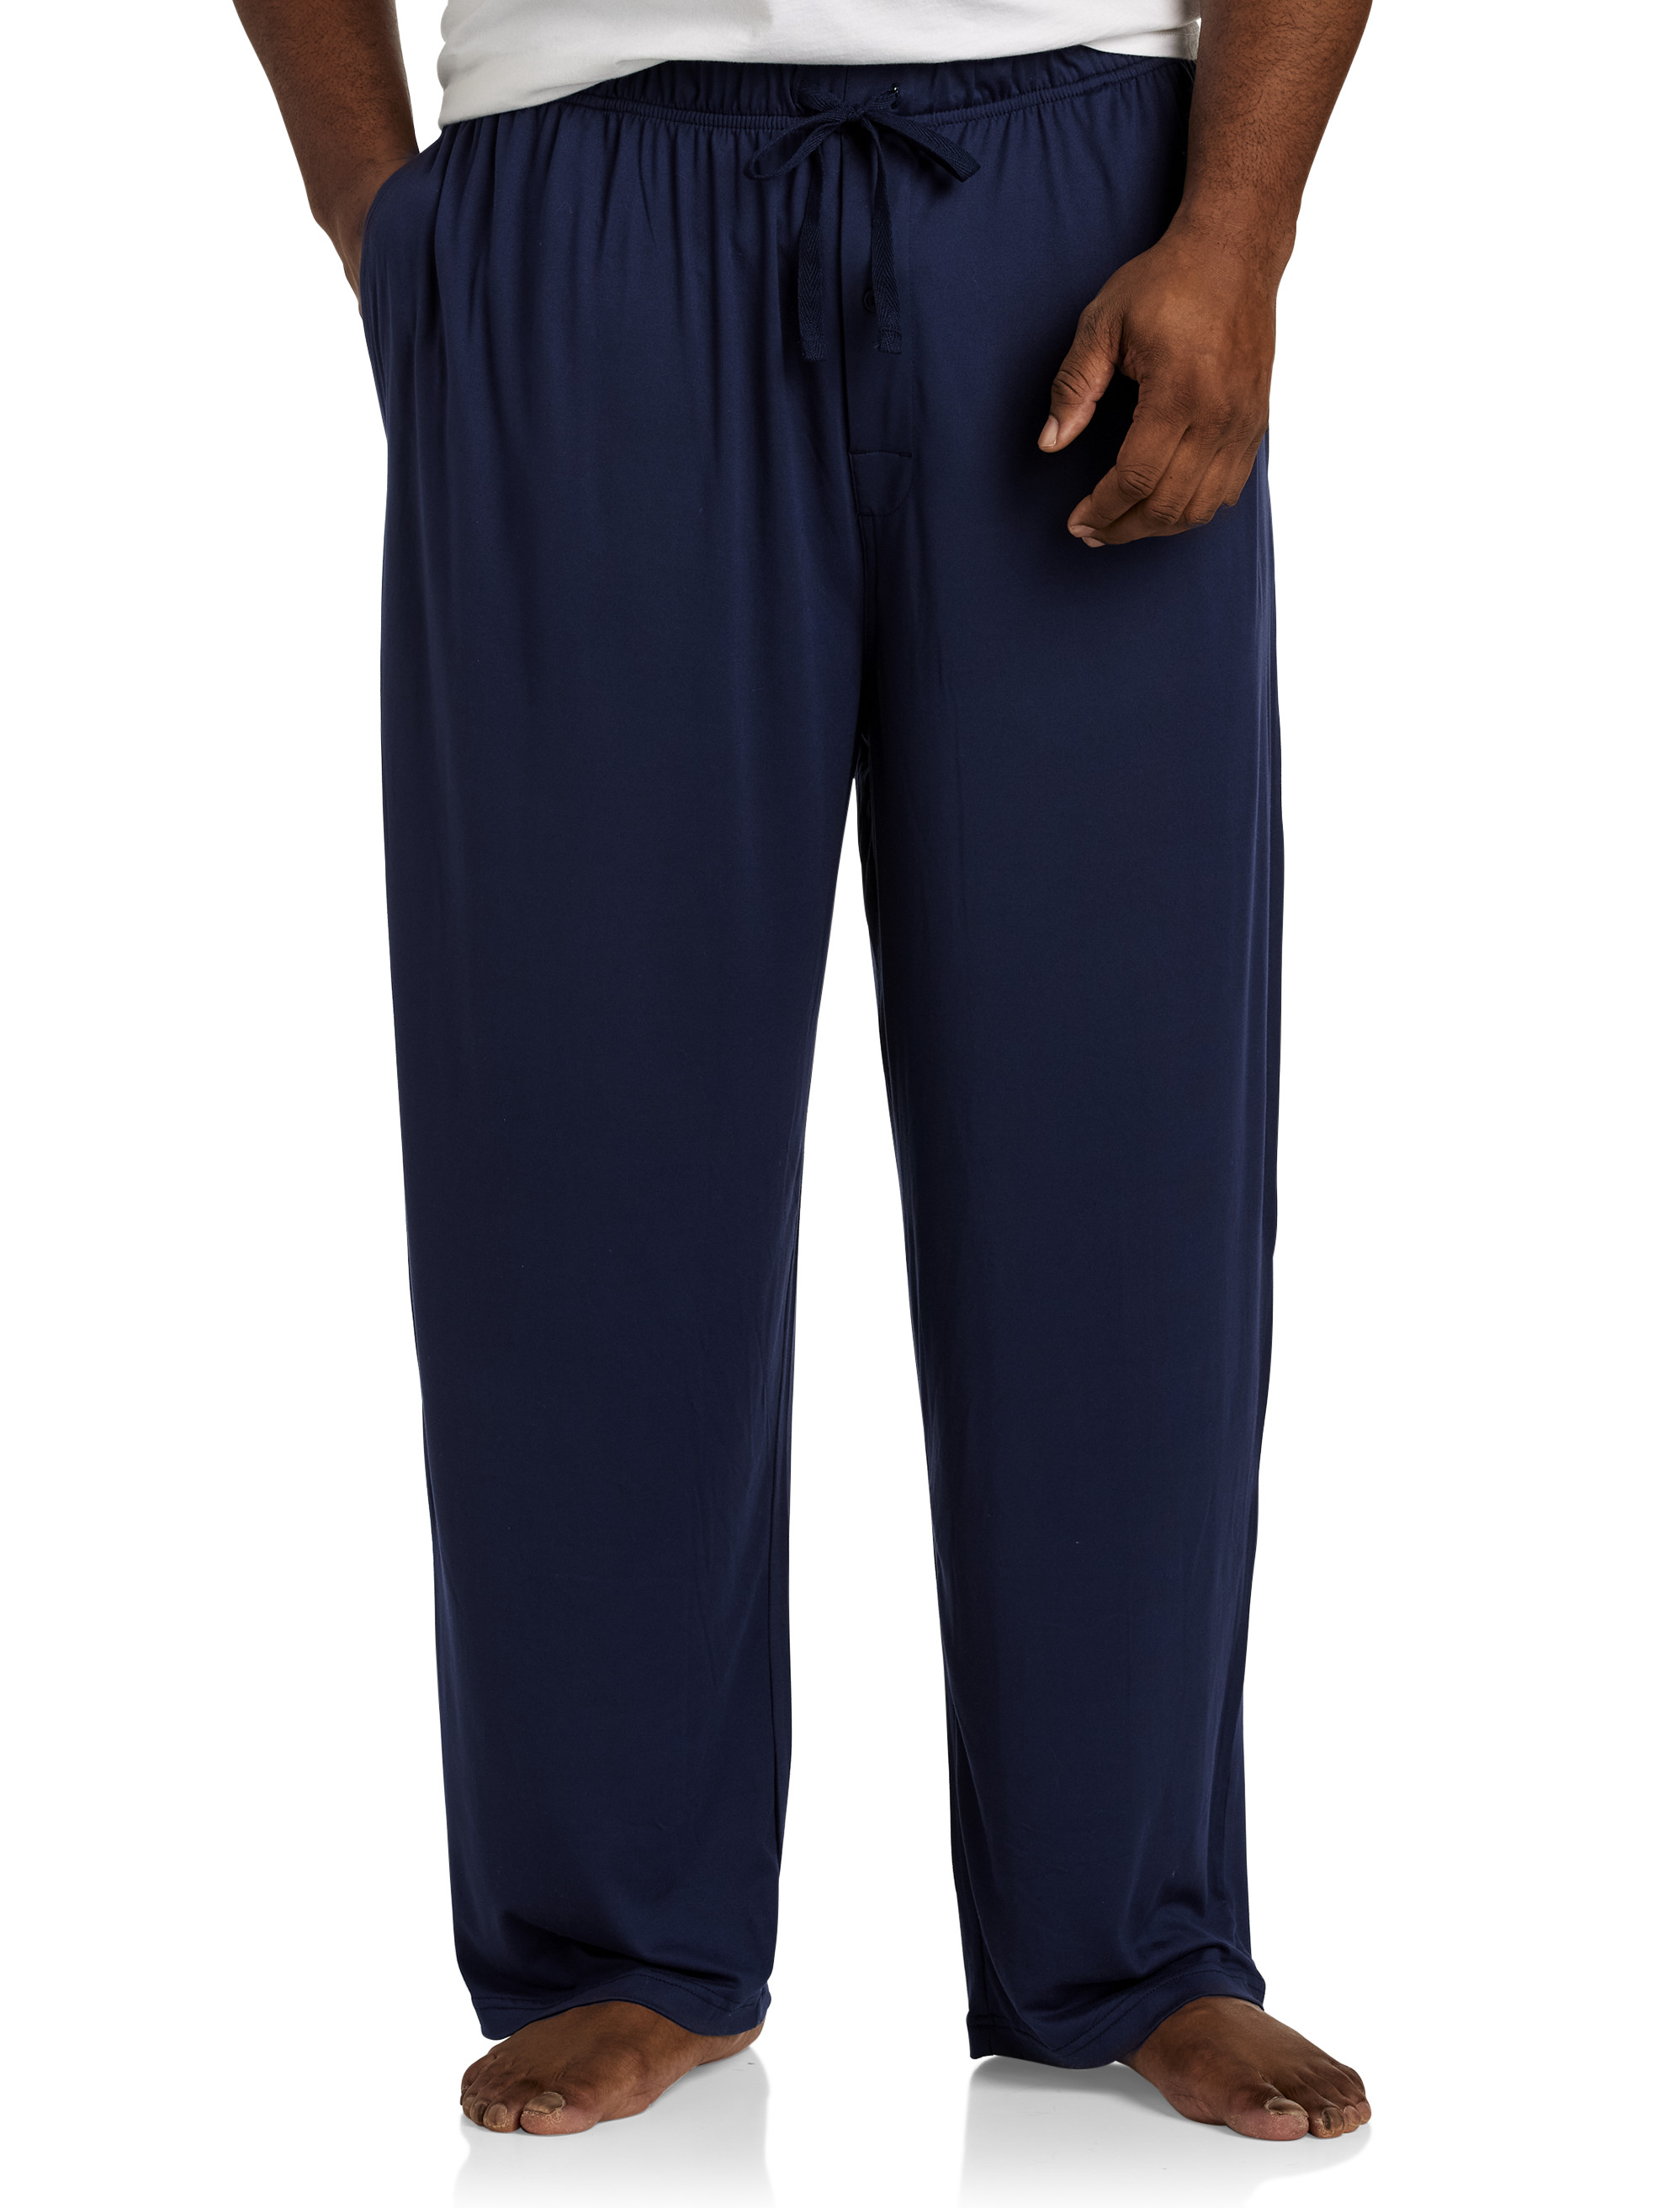 Big + Tall, Harbor Bay Jersey Knit Lounge Pants